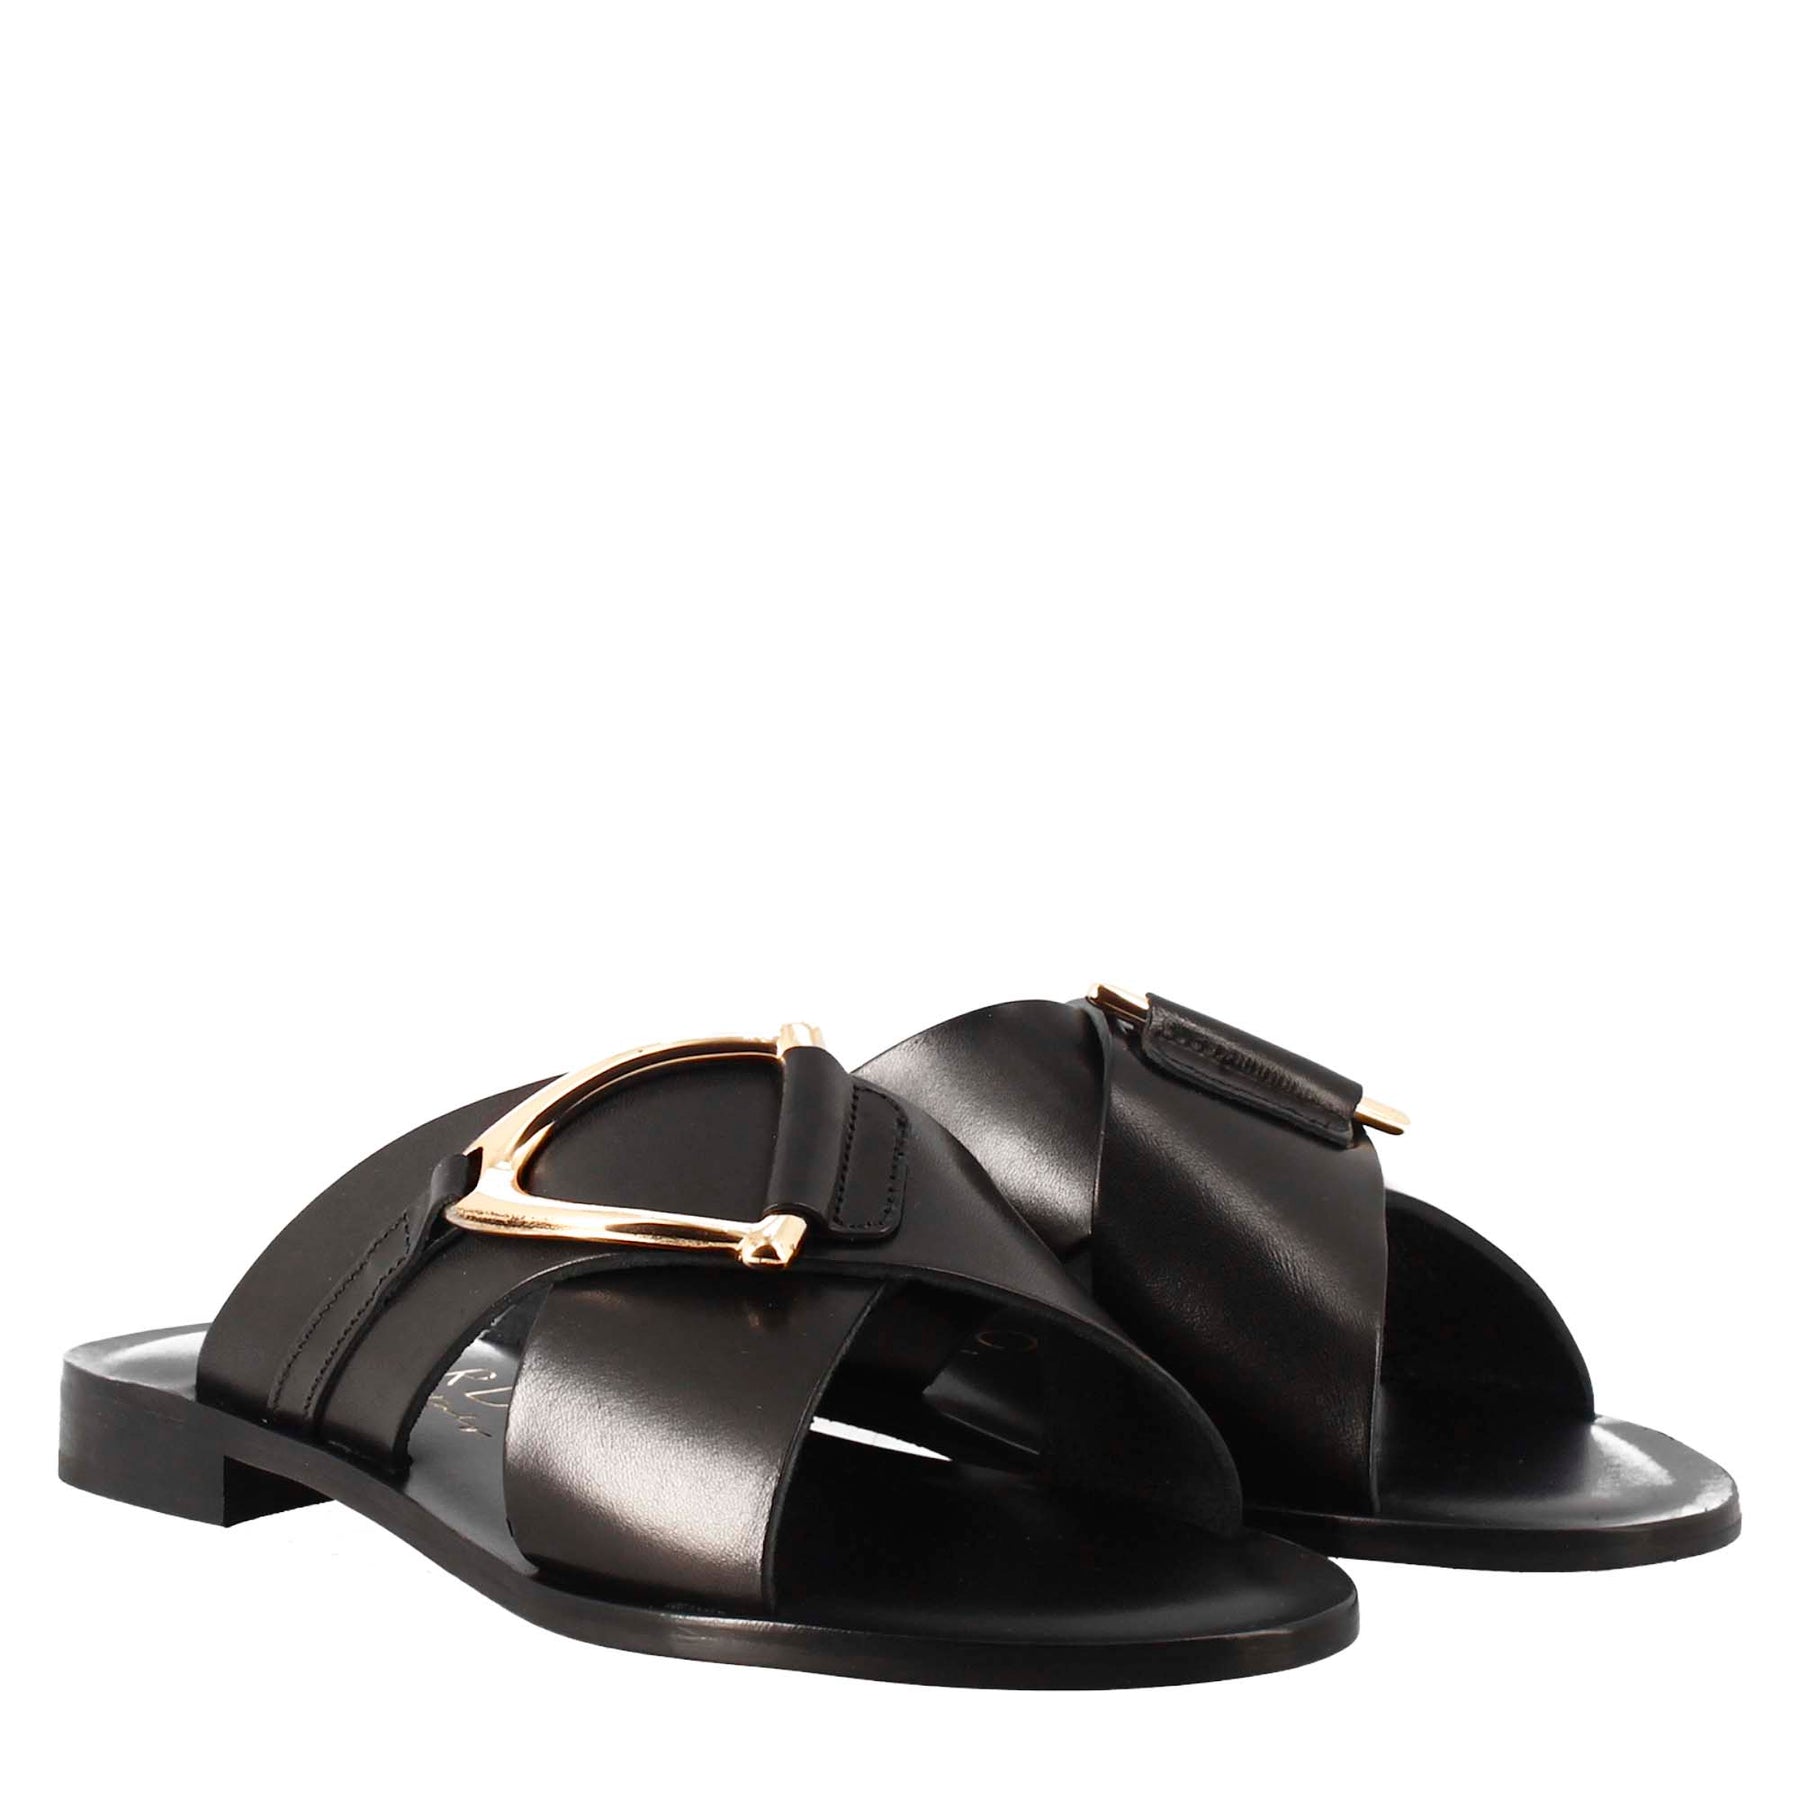 Women's handmade slipper sandals in black leather with golden buckle